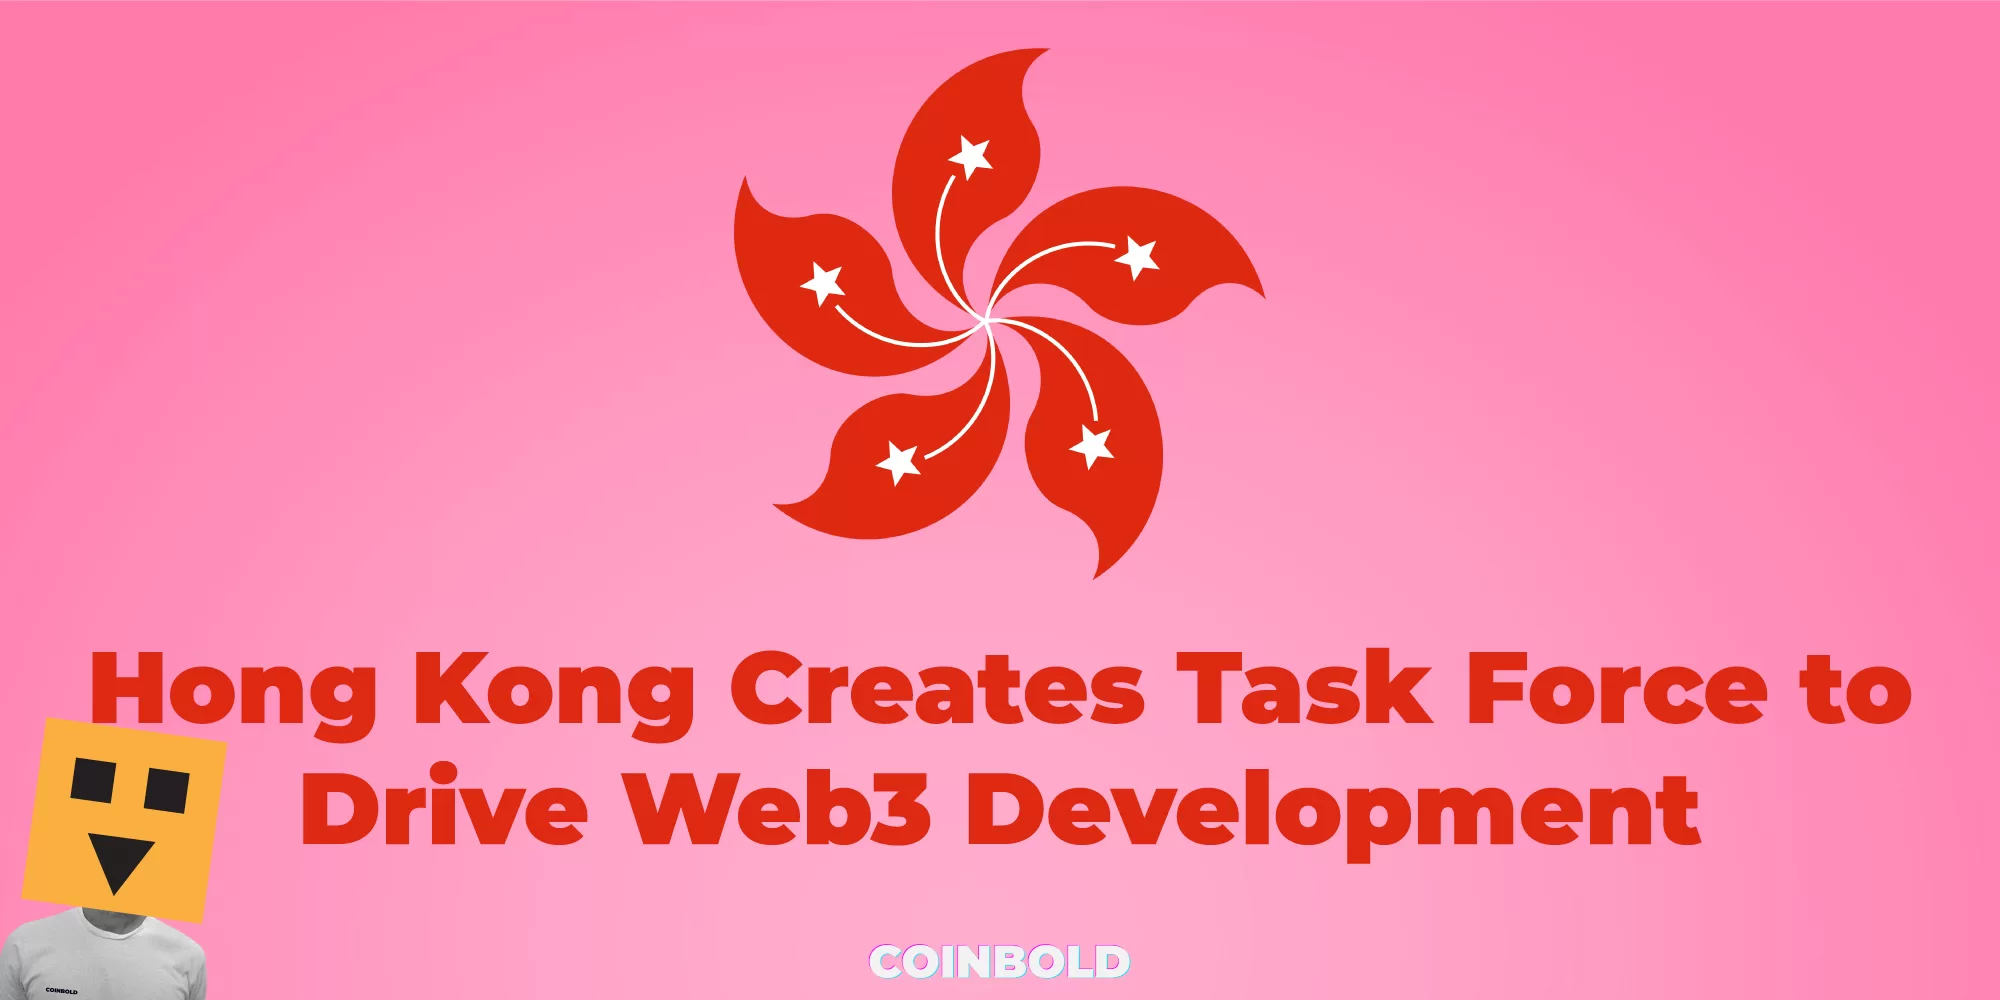 Hong Kong Creates Task Force to Drive Web3 Development